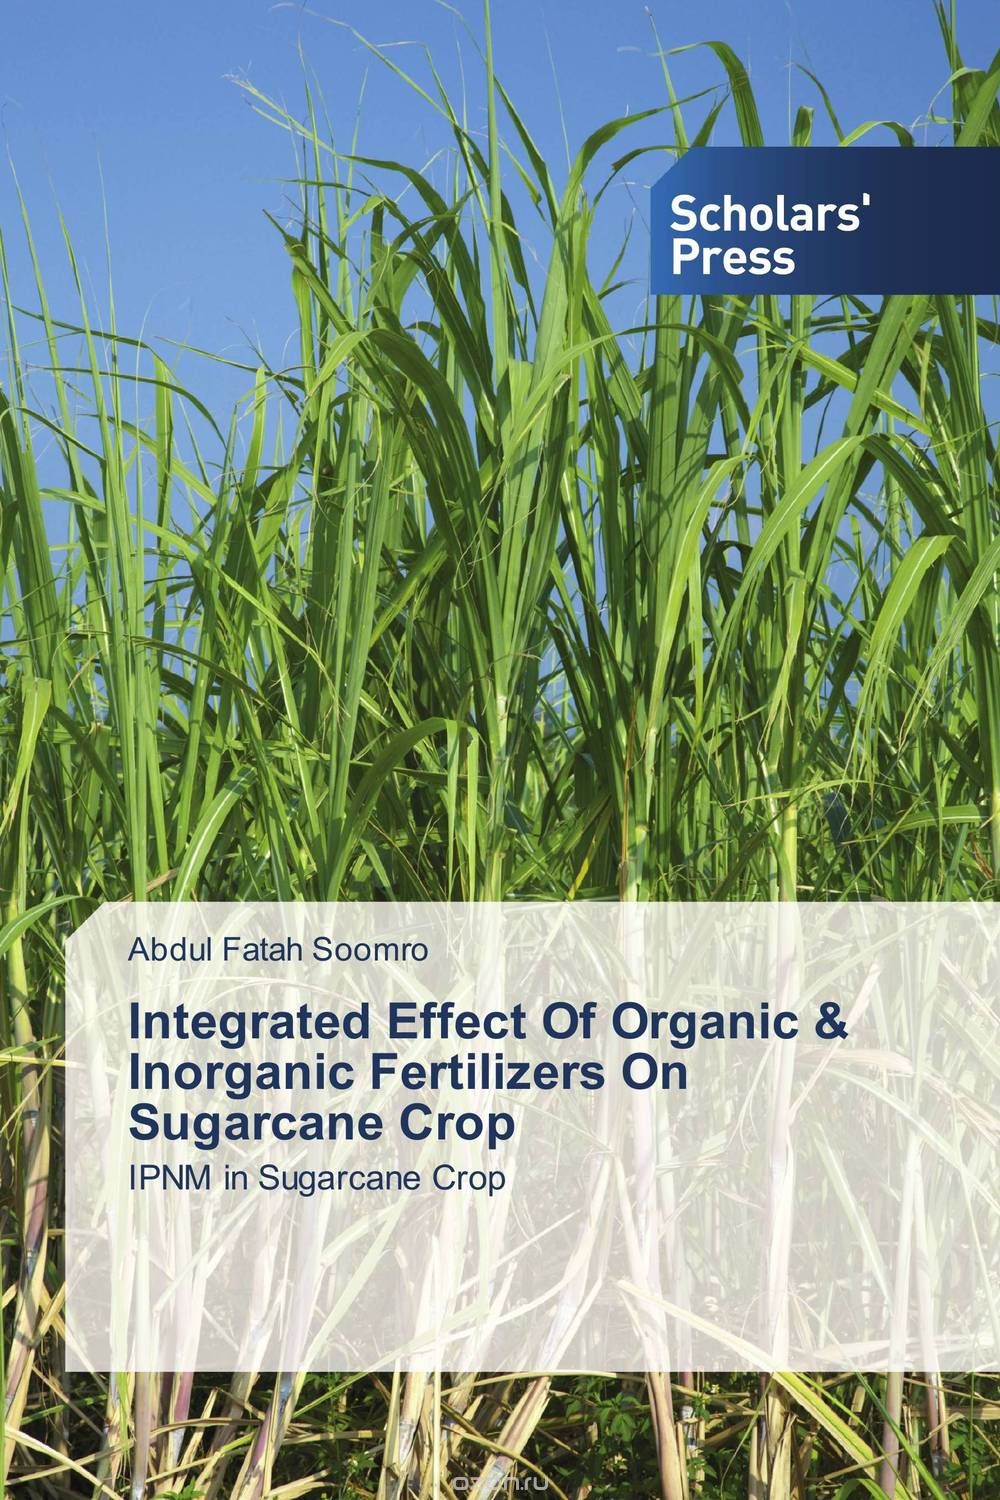 Скачать книгу "Integrated Effect Of Organic & Inorganic Fertilizers On Sugarcane Crop"